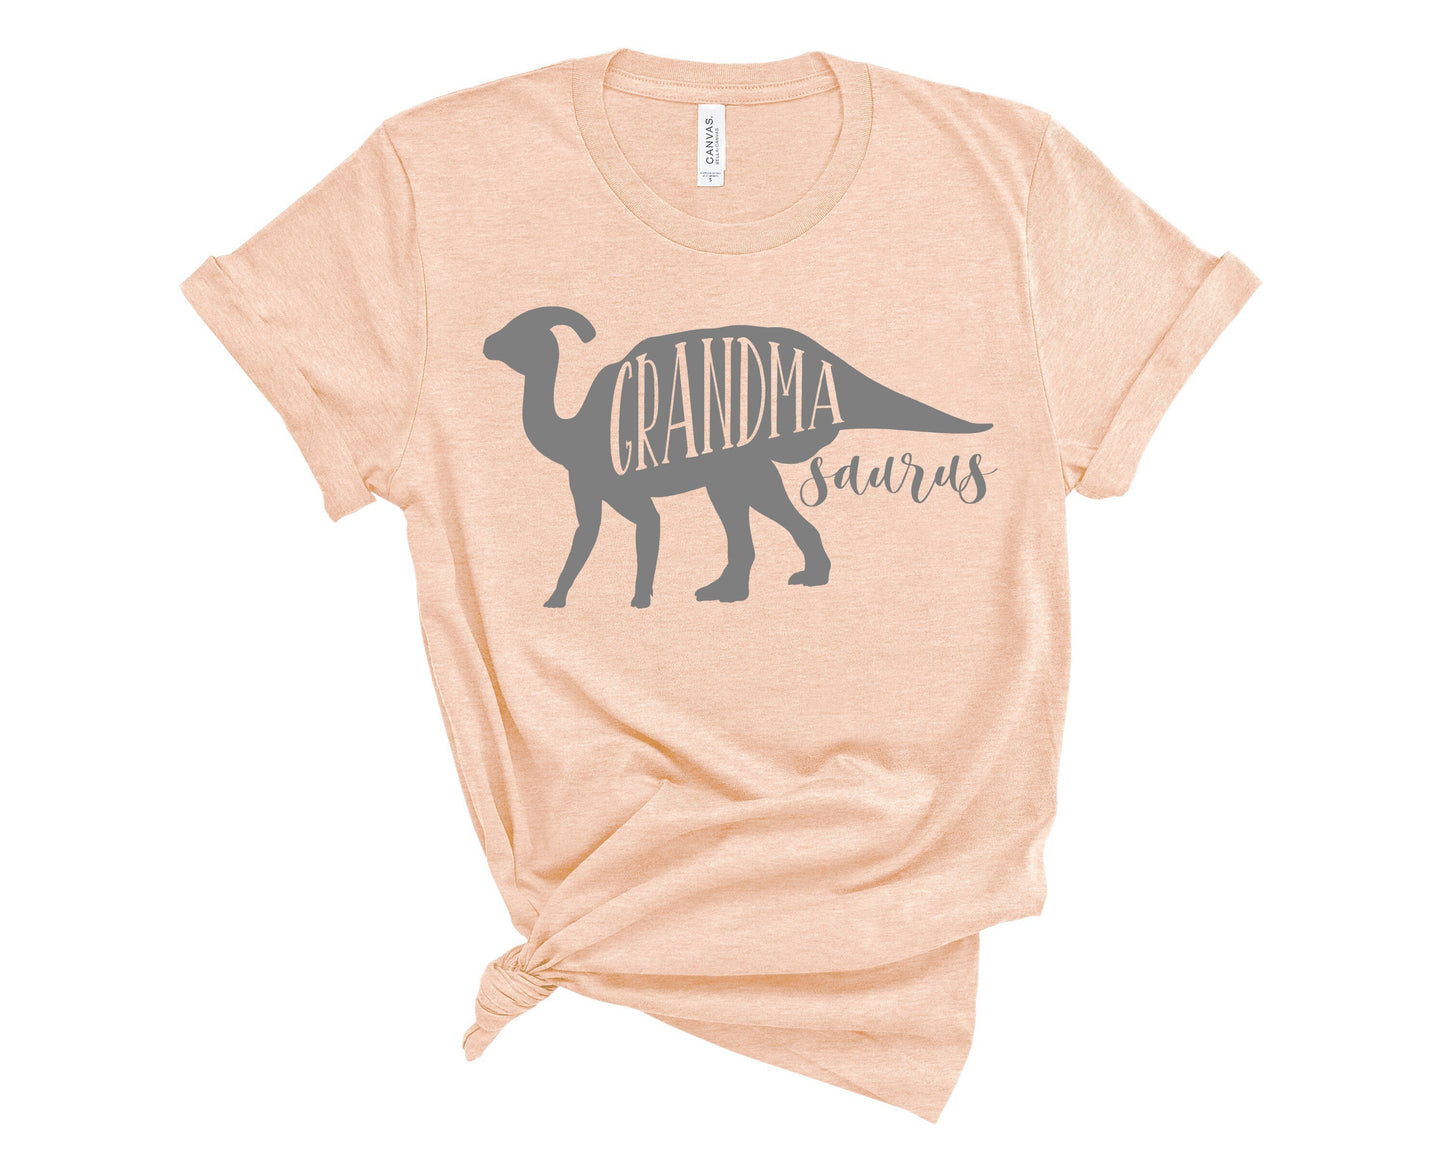 Grandmasaurus Shirt - Dinosaur Birthday Party - 3 Rex Birthday Party - Dinosaur Shirt - Dinosaur Party Shirt for Grandma